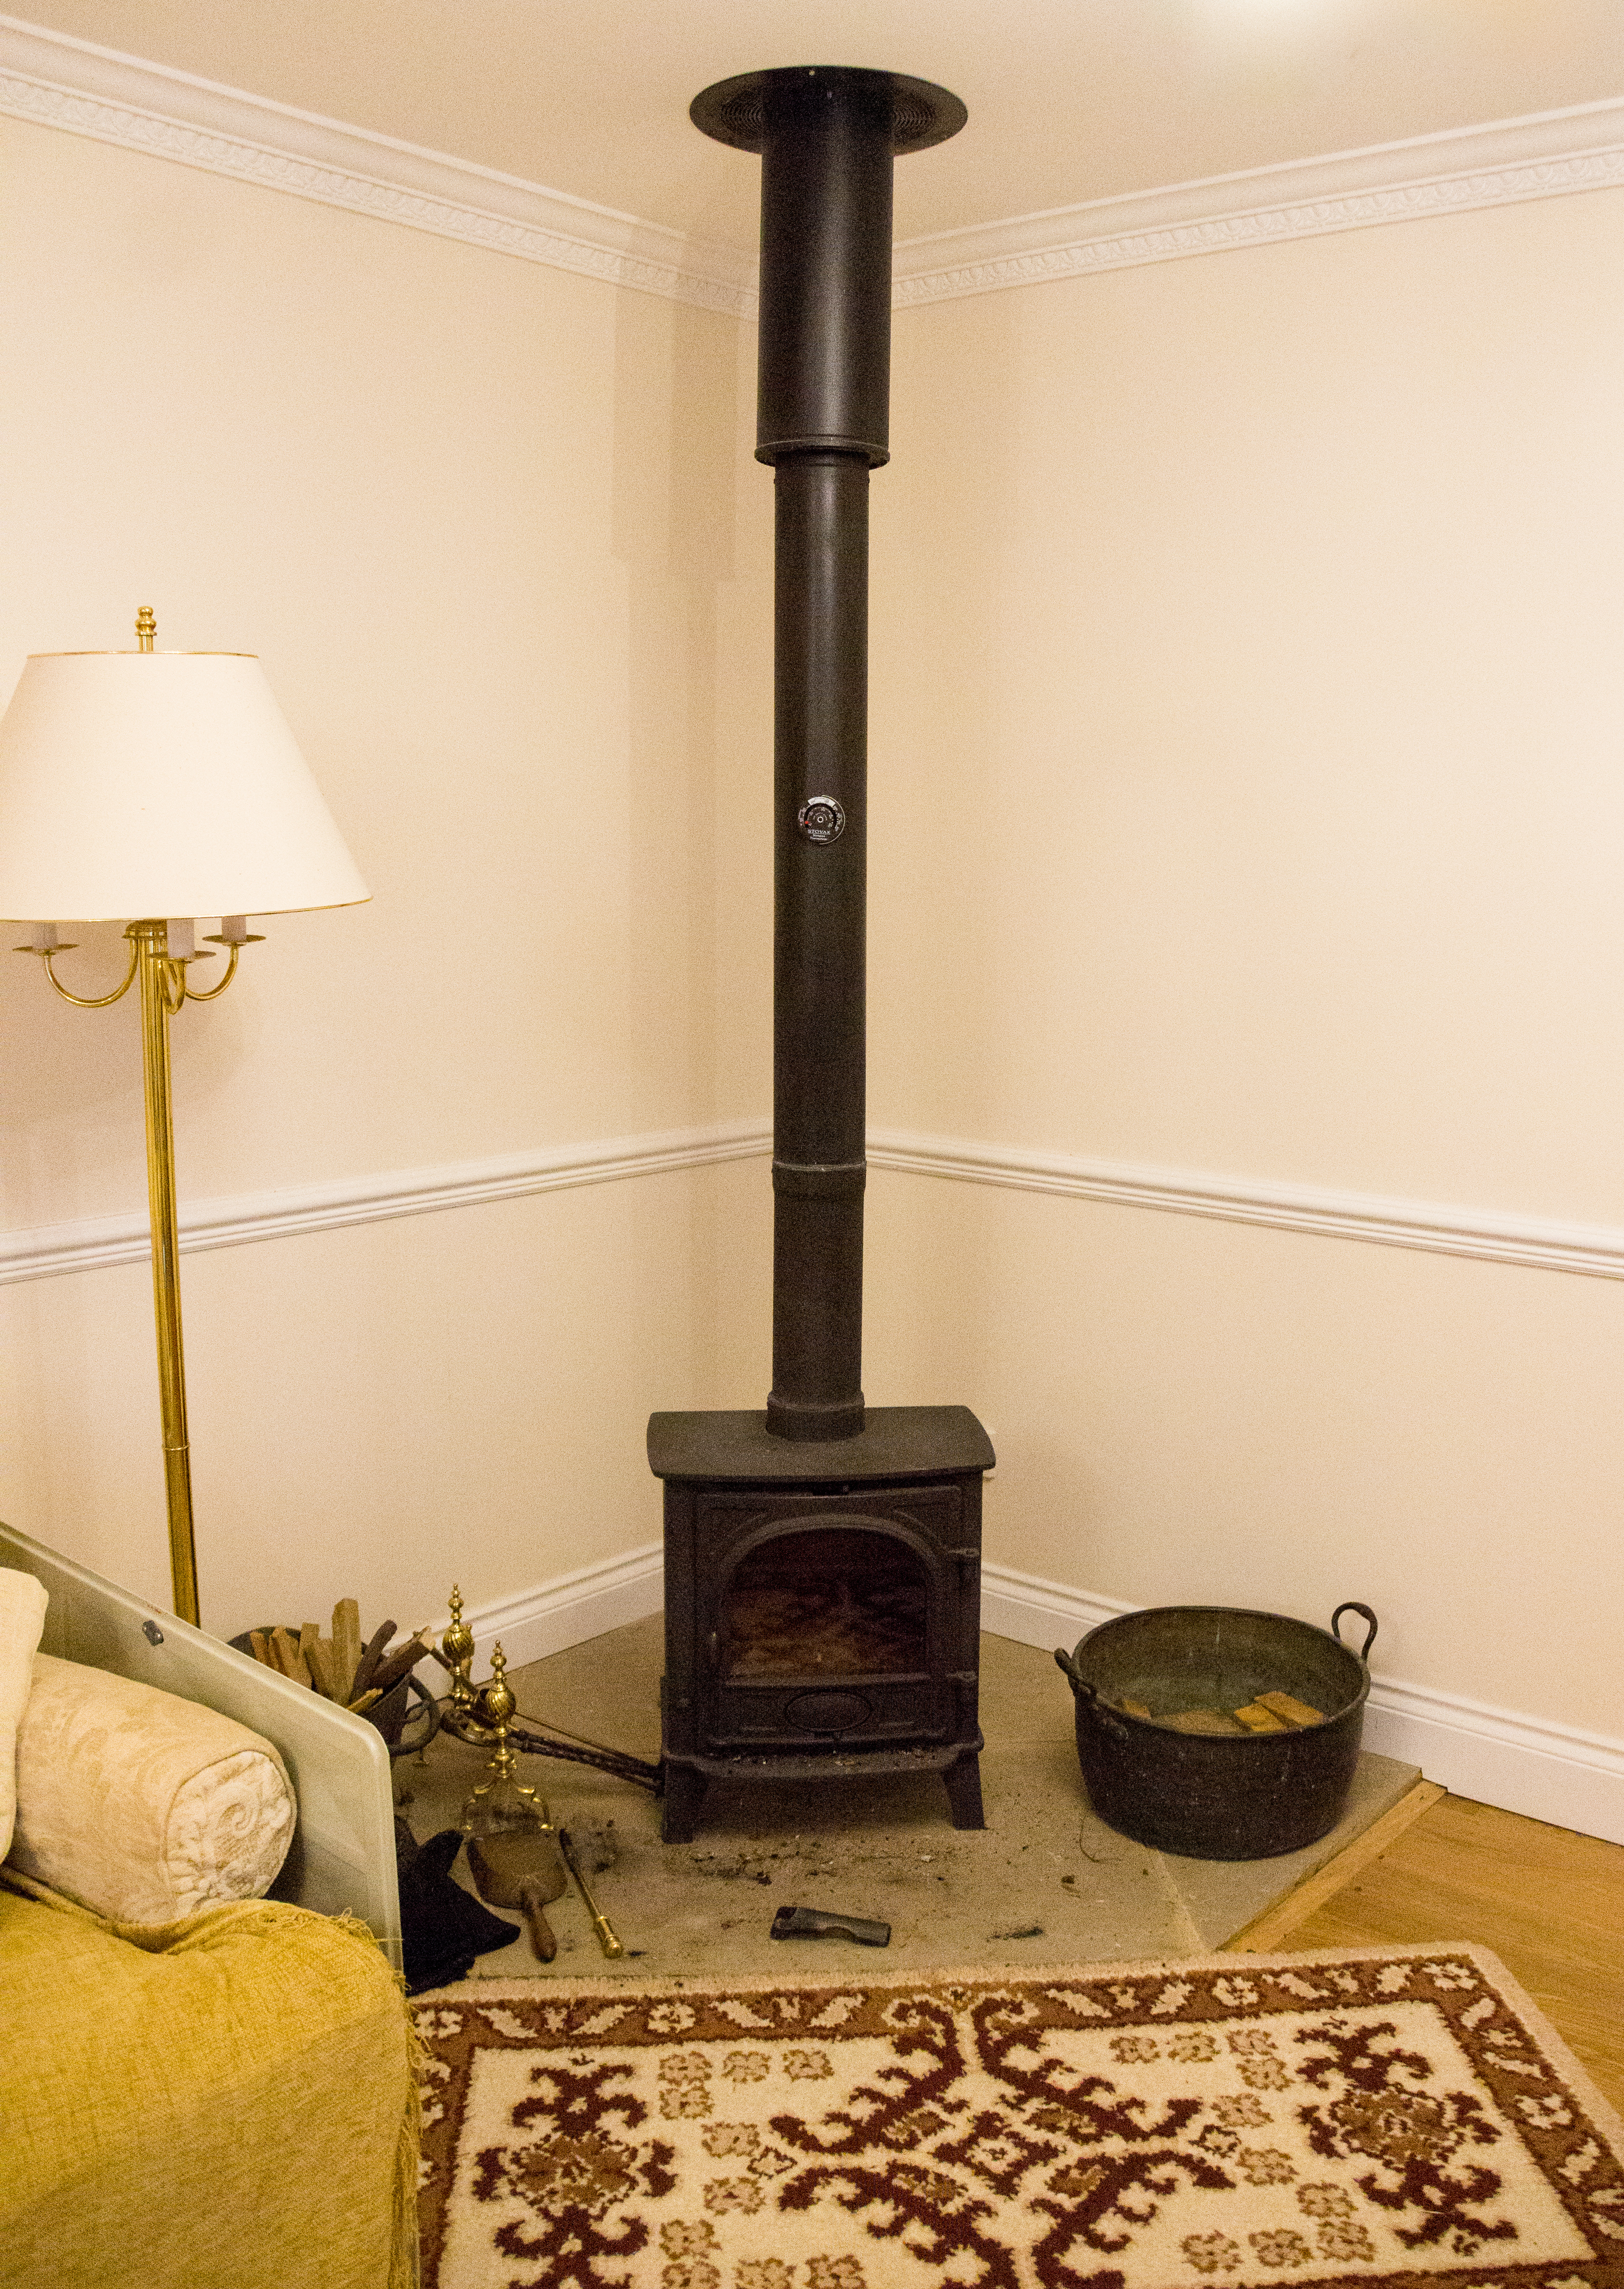 Wood burner installed in the corner of the room